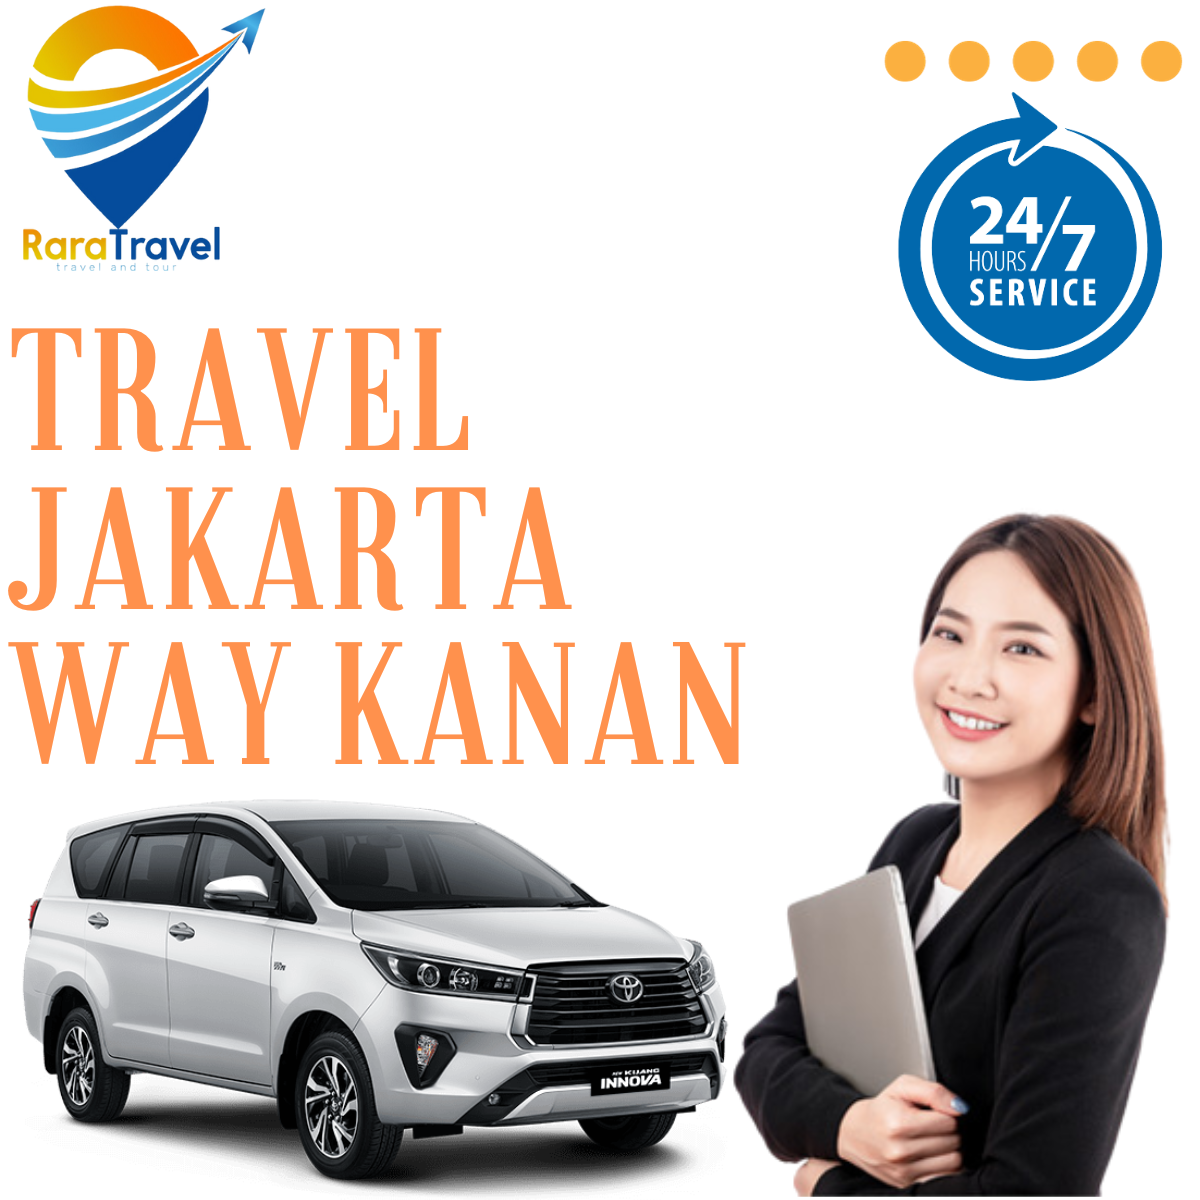 Travel Jakarta Way Kanan PP Harga Tiket Murah Hiace via TOLL Layanan 24 Jam Jadwal Lengkap Door to Door